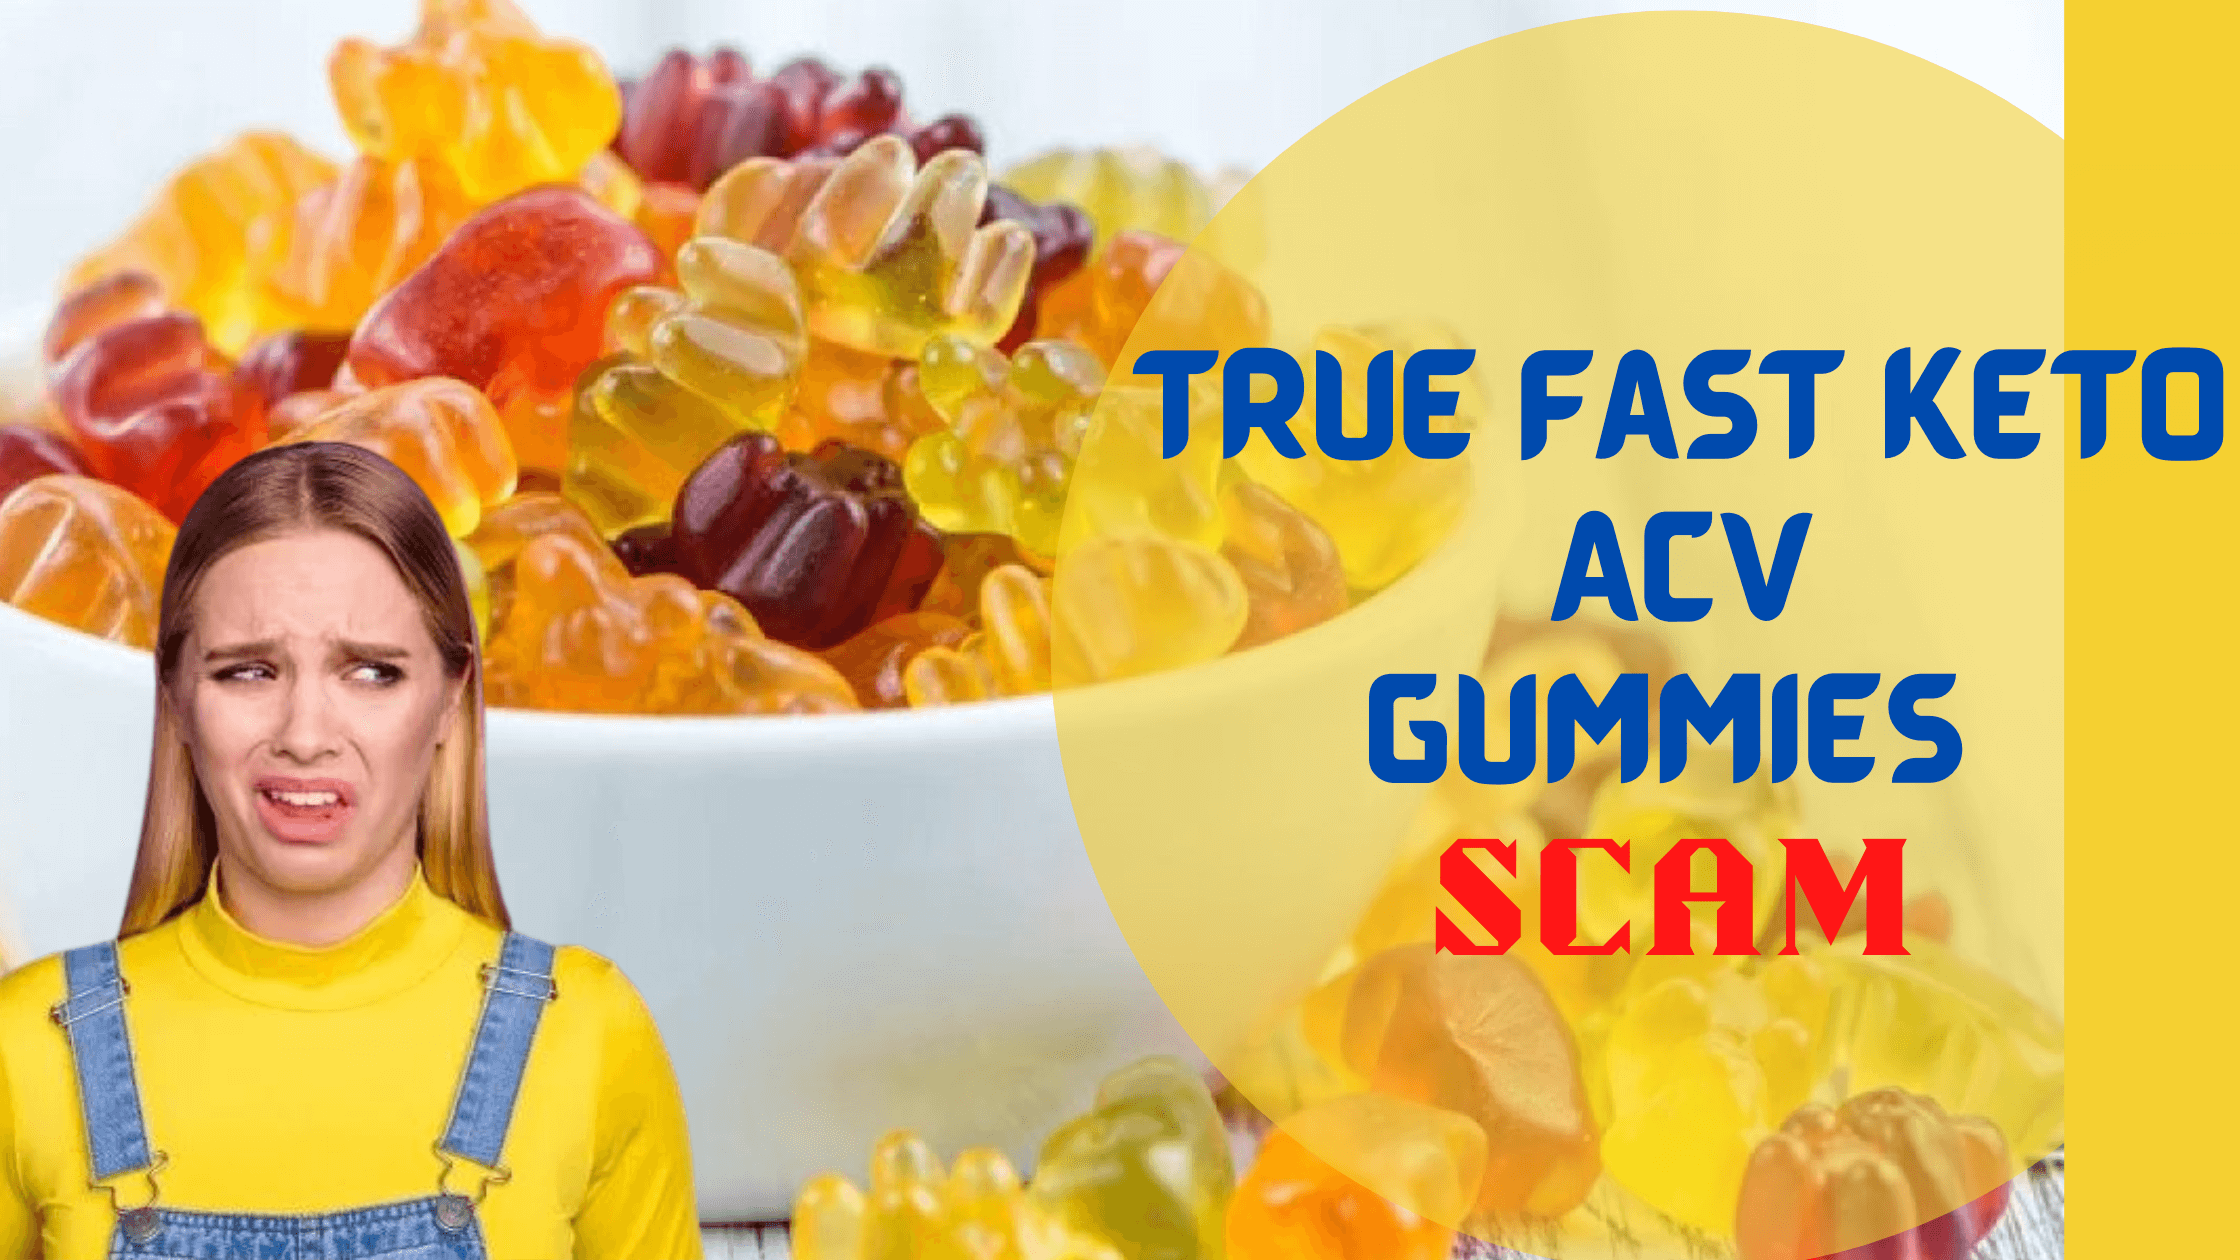 True Fast Keto ACV Gummies Scam